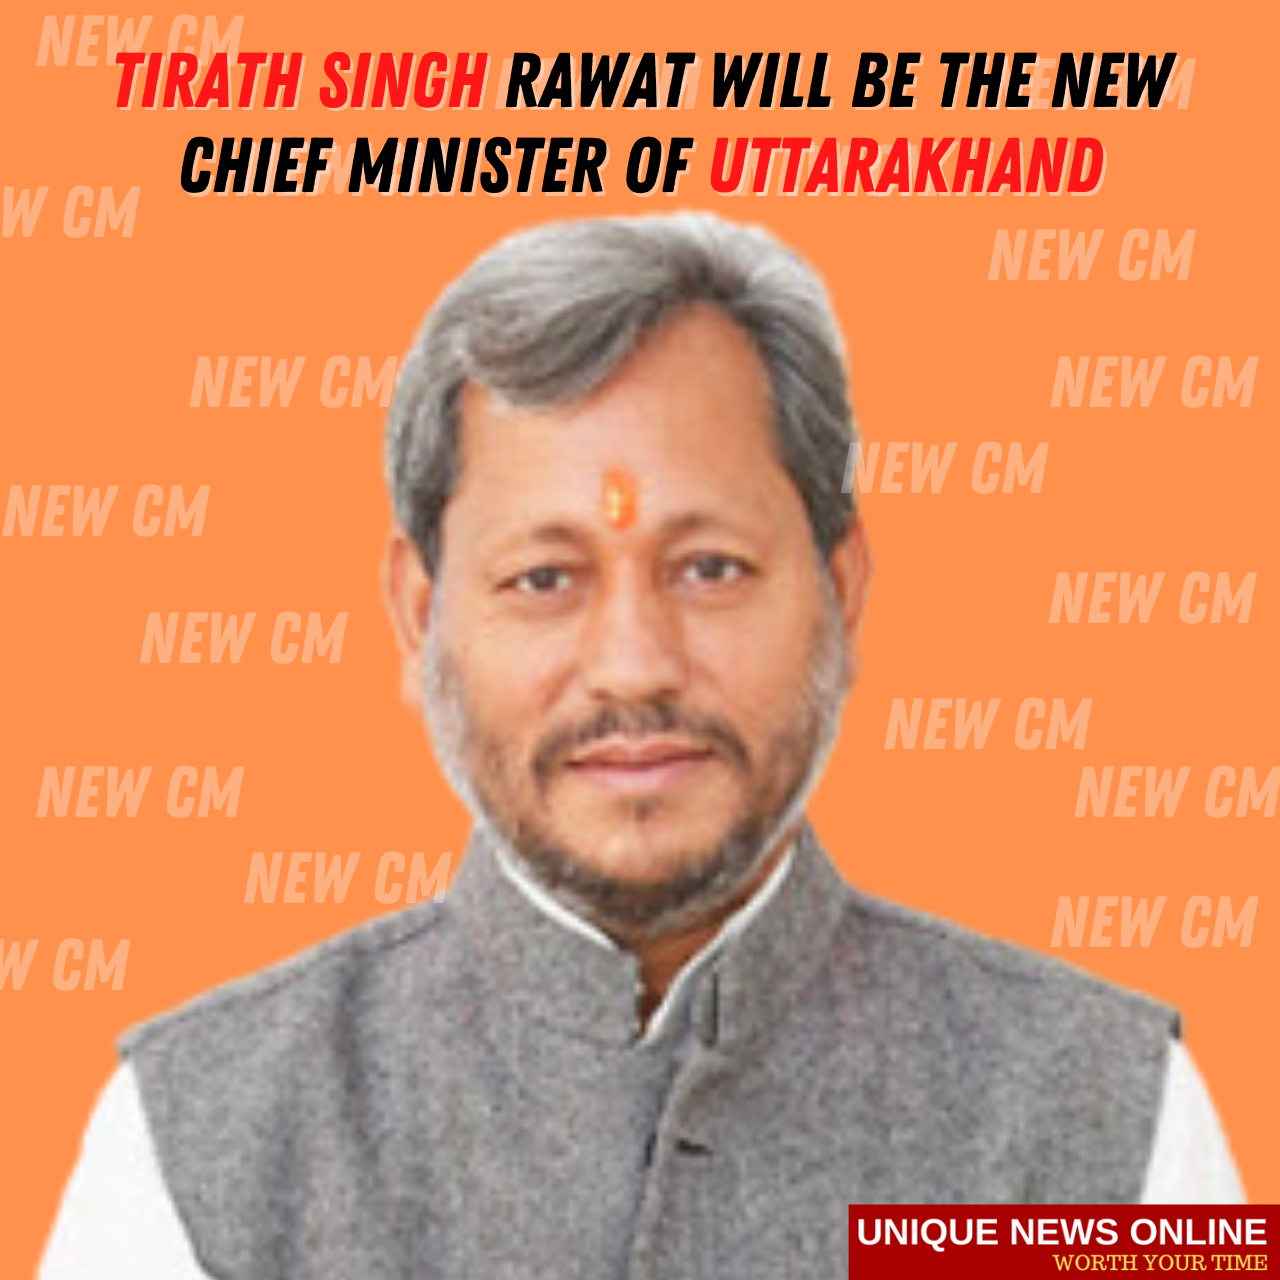 Breaking News: Tirath Singh Rawat will be the new Chief Minister of Uttarakhand